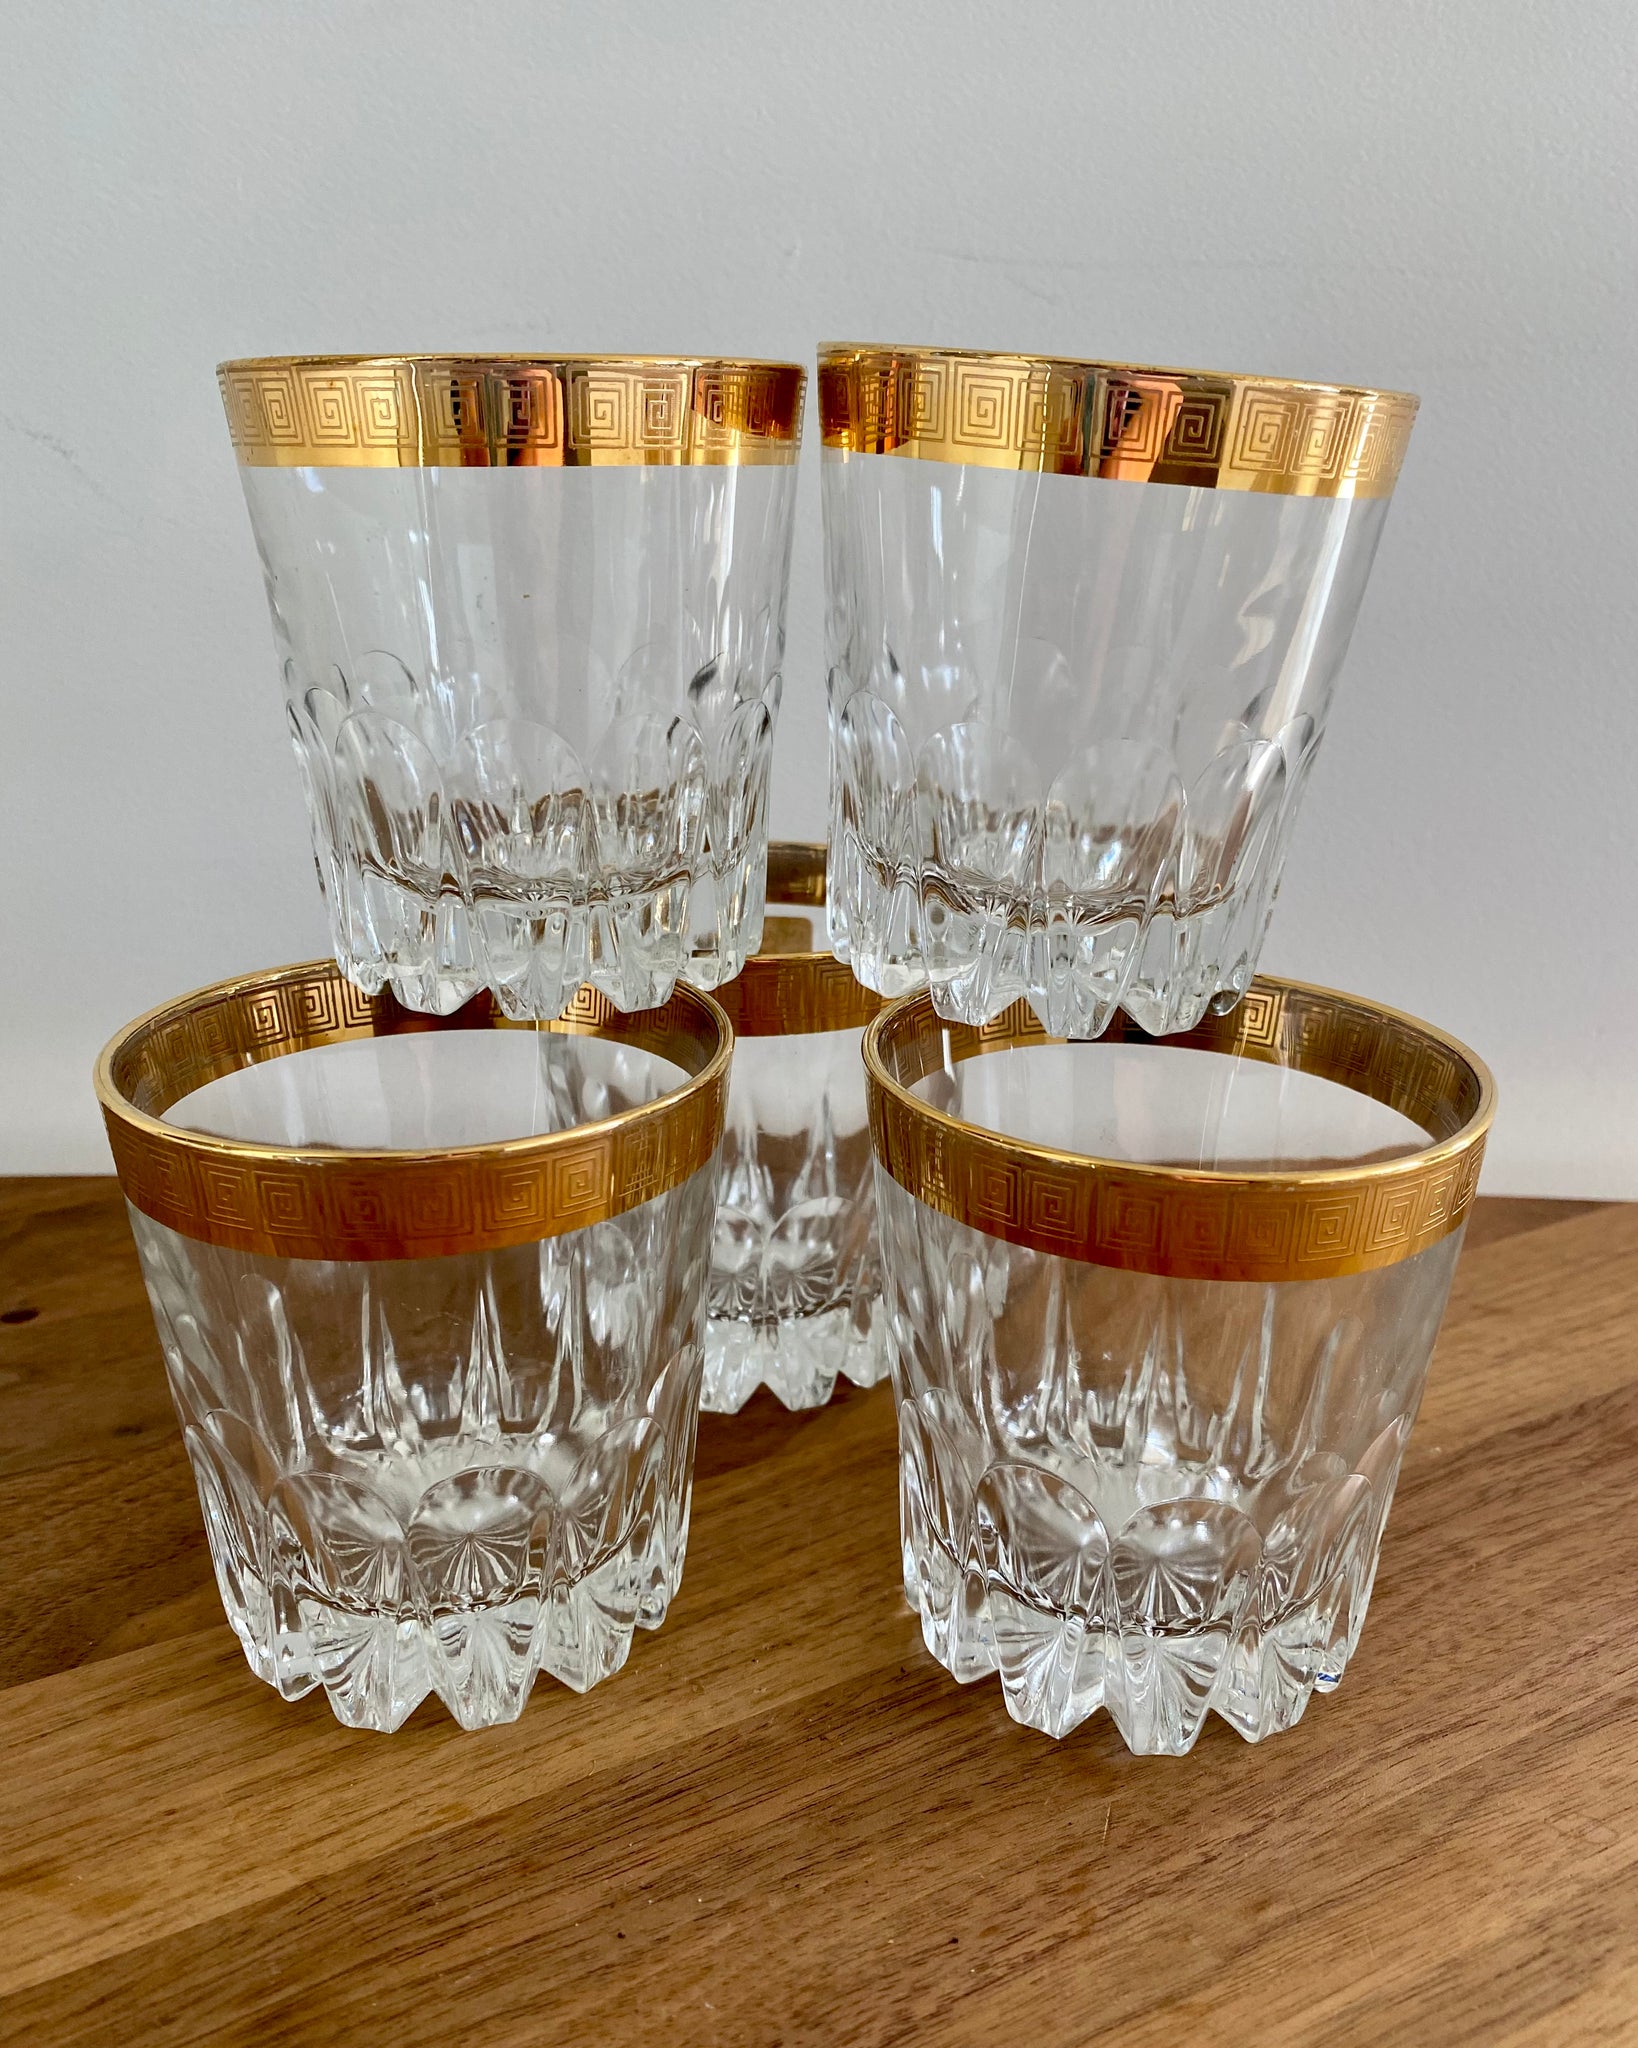 Vintage Czech cristal glasses set of 5